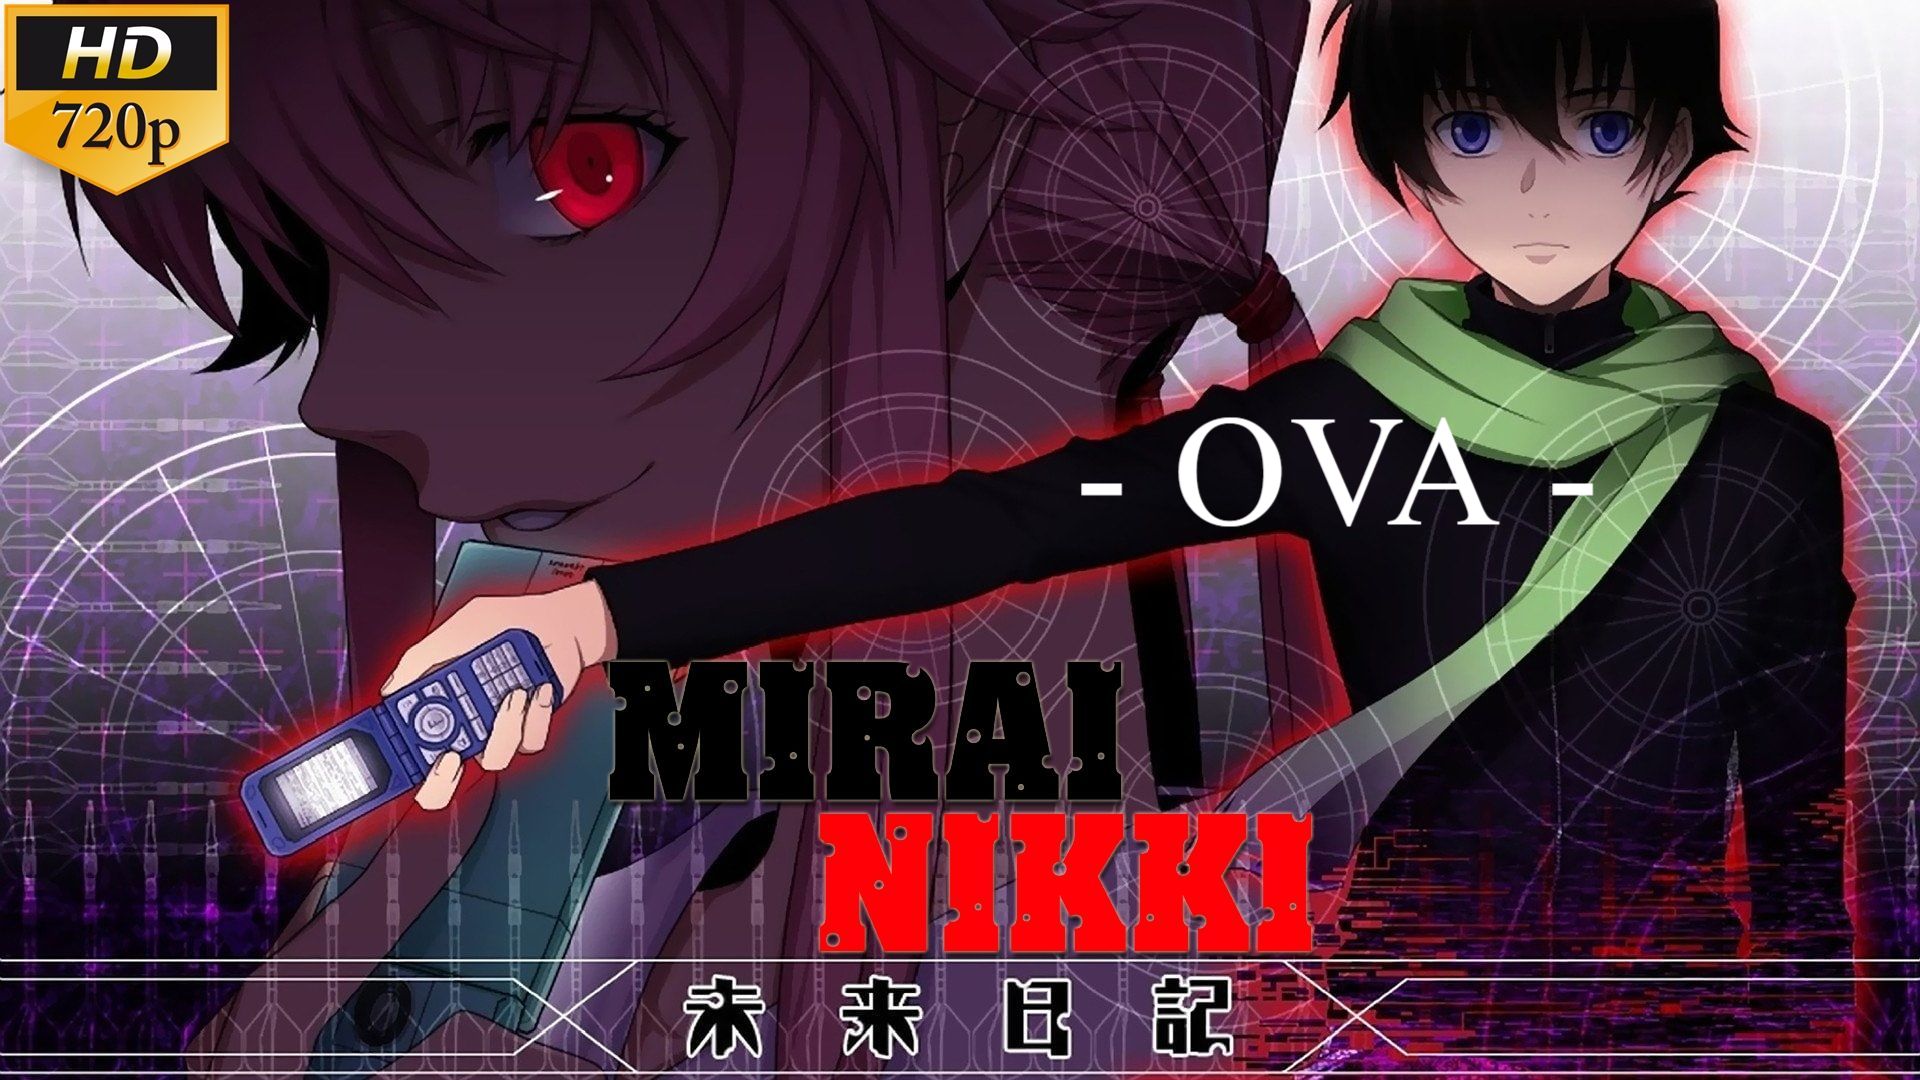 Mirai Nikki Redial (OVA) - Vale a Pena? 